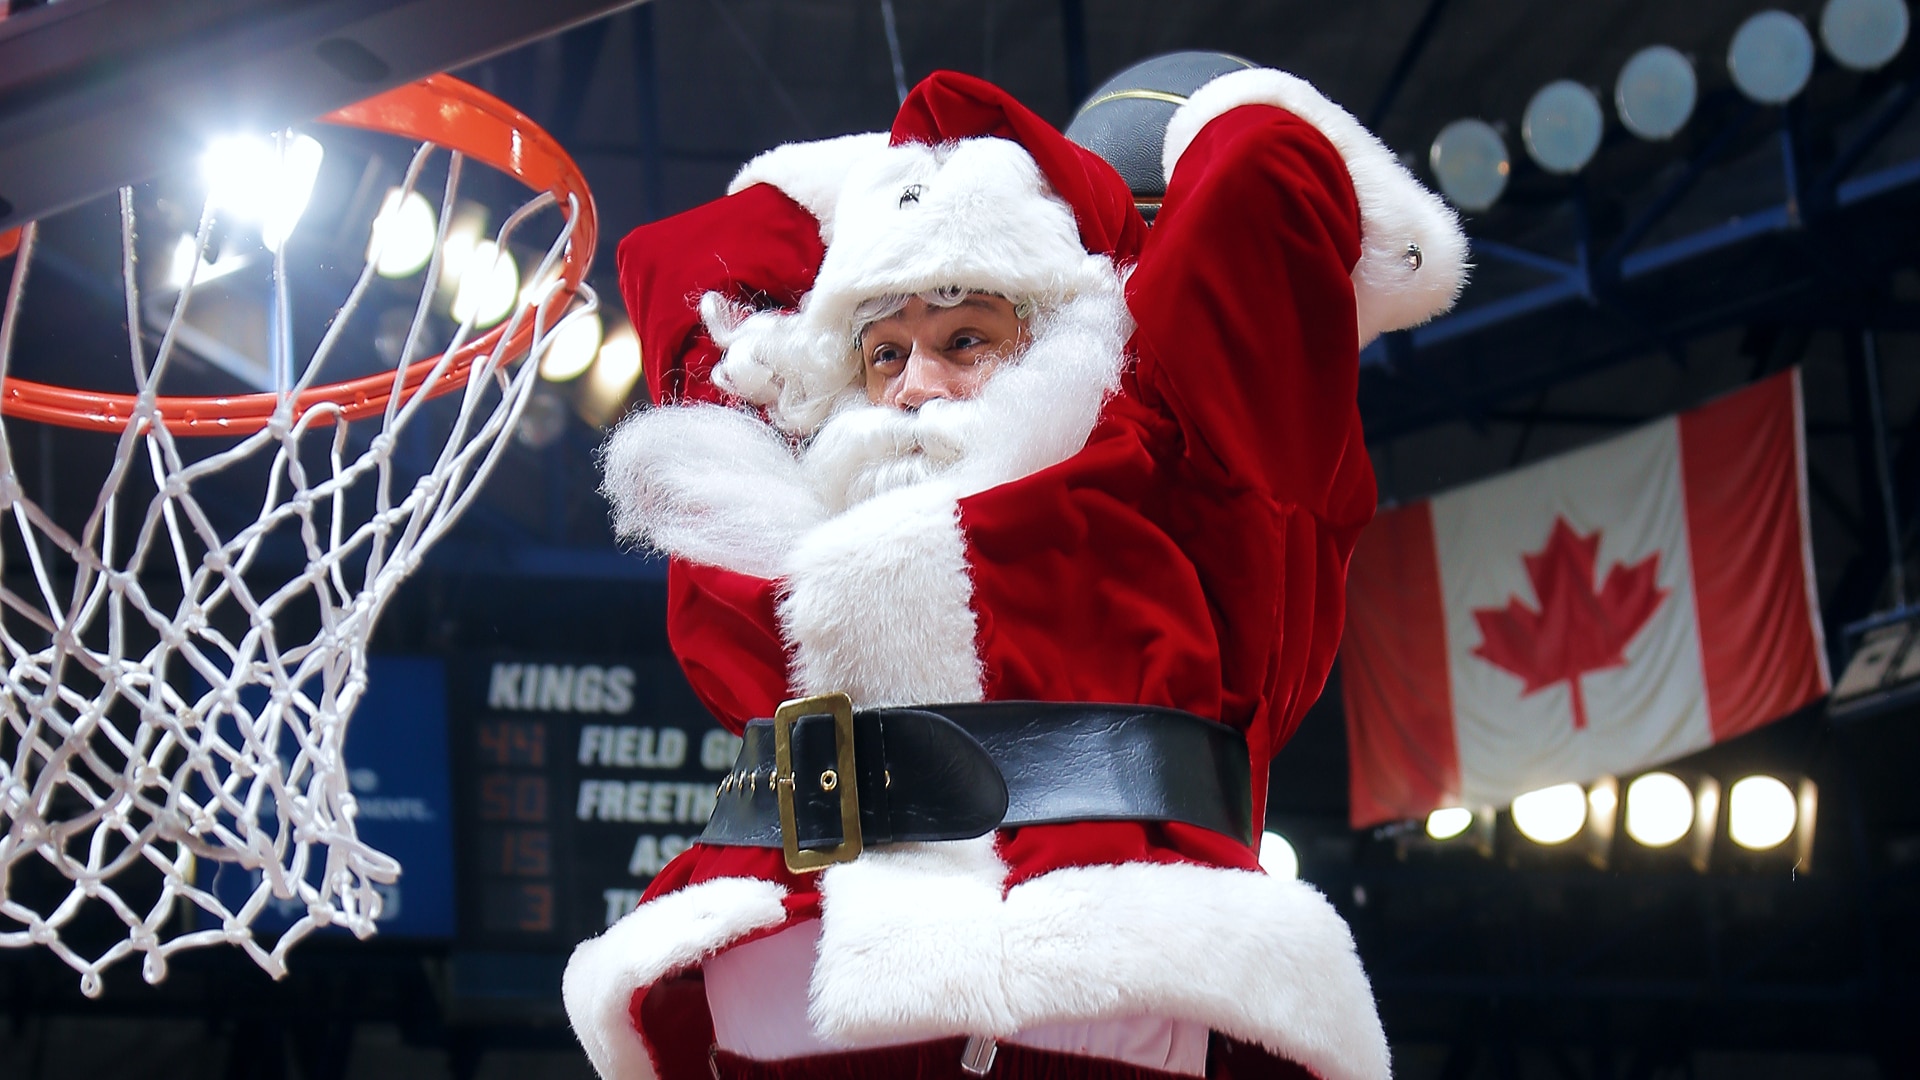 The history of NBA games on Christmas Day